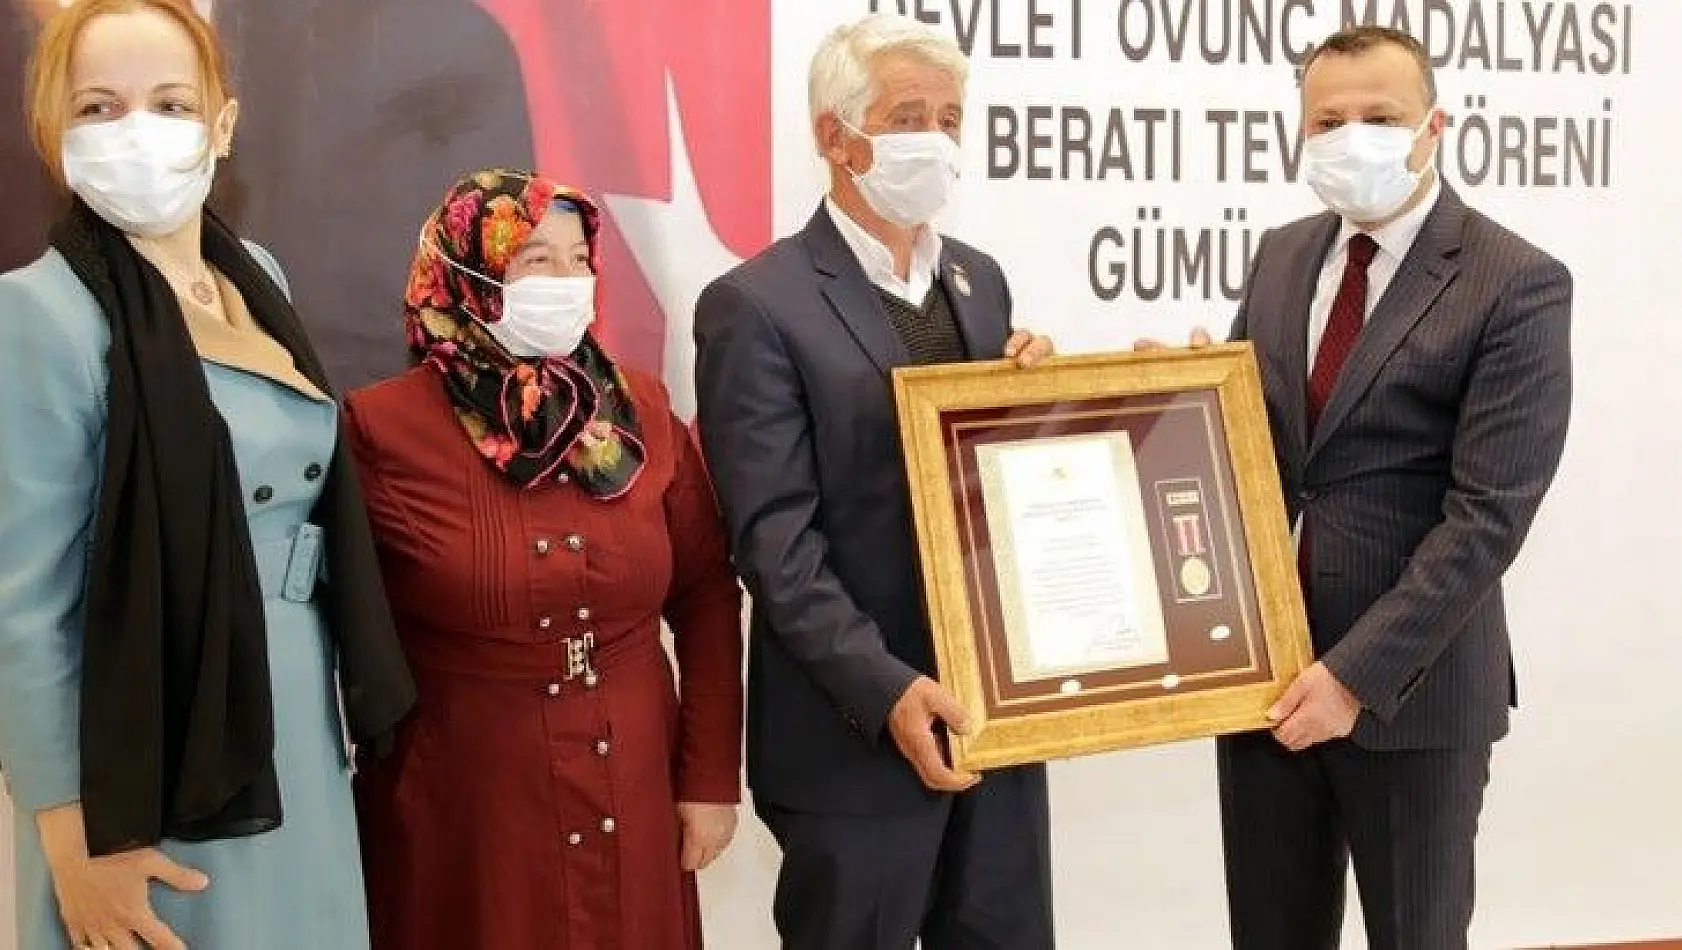 Gazi Hasan Turgut'a devlet övünç madalyası verildi